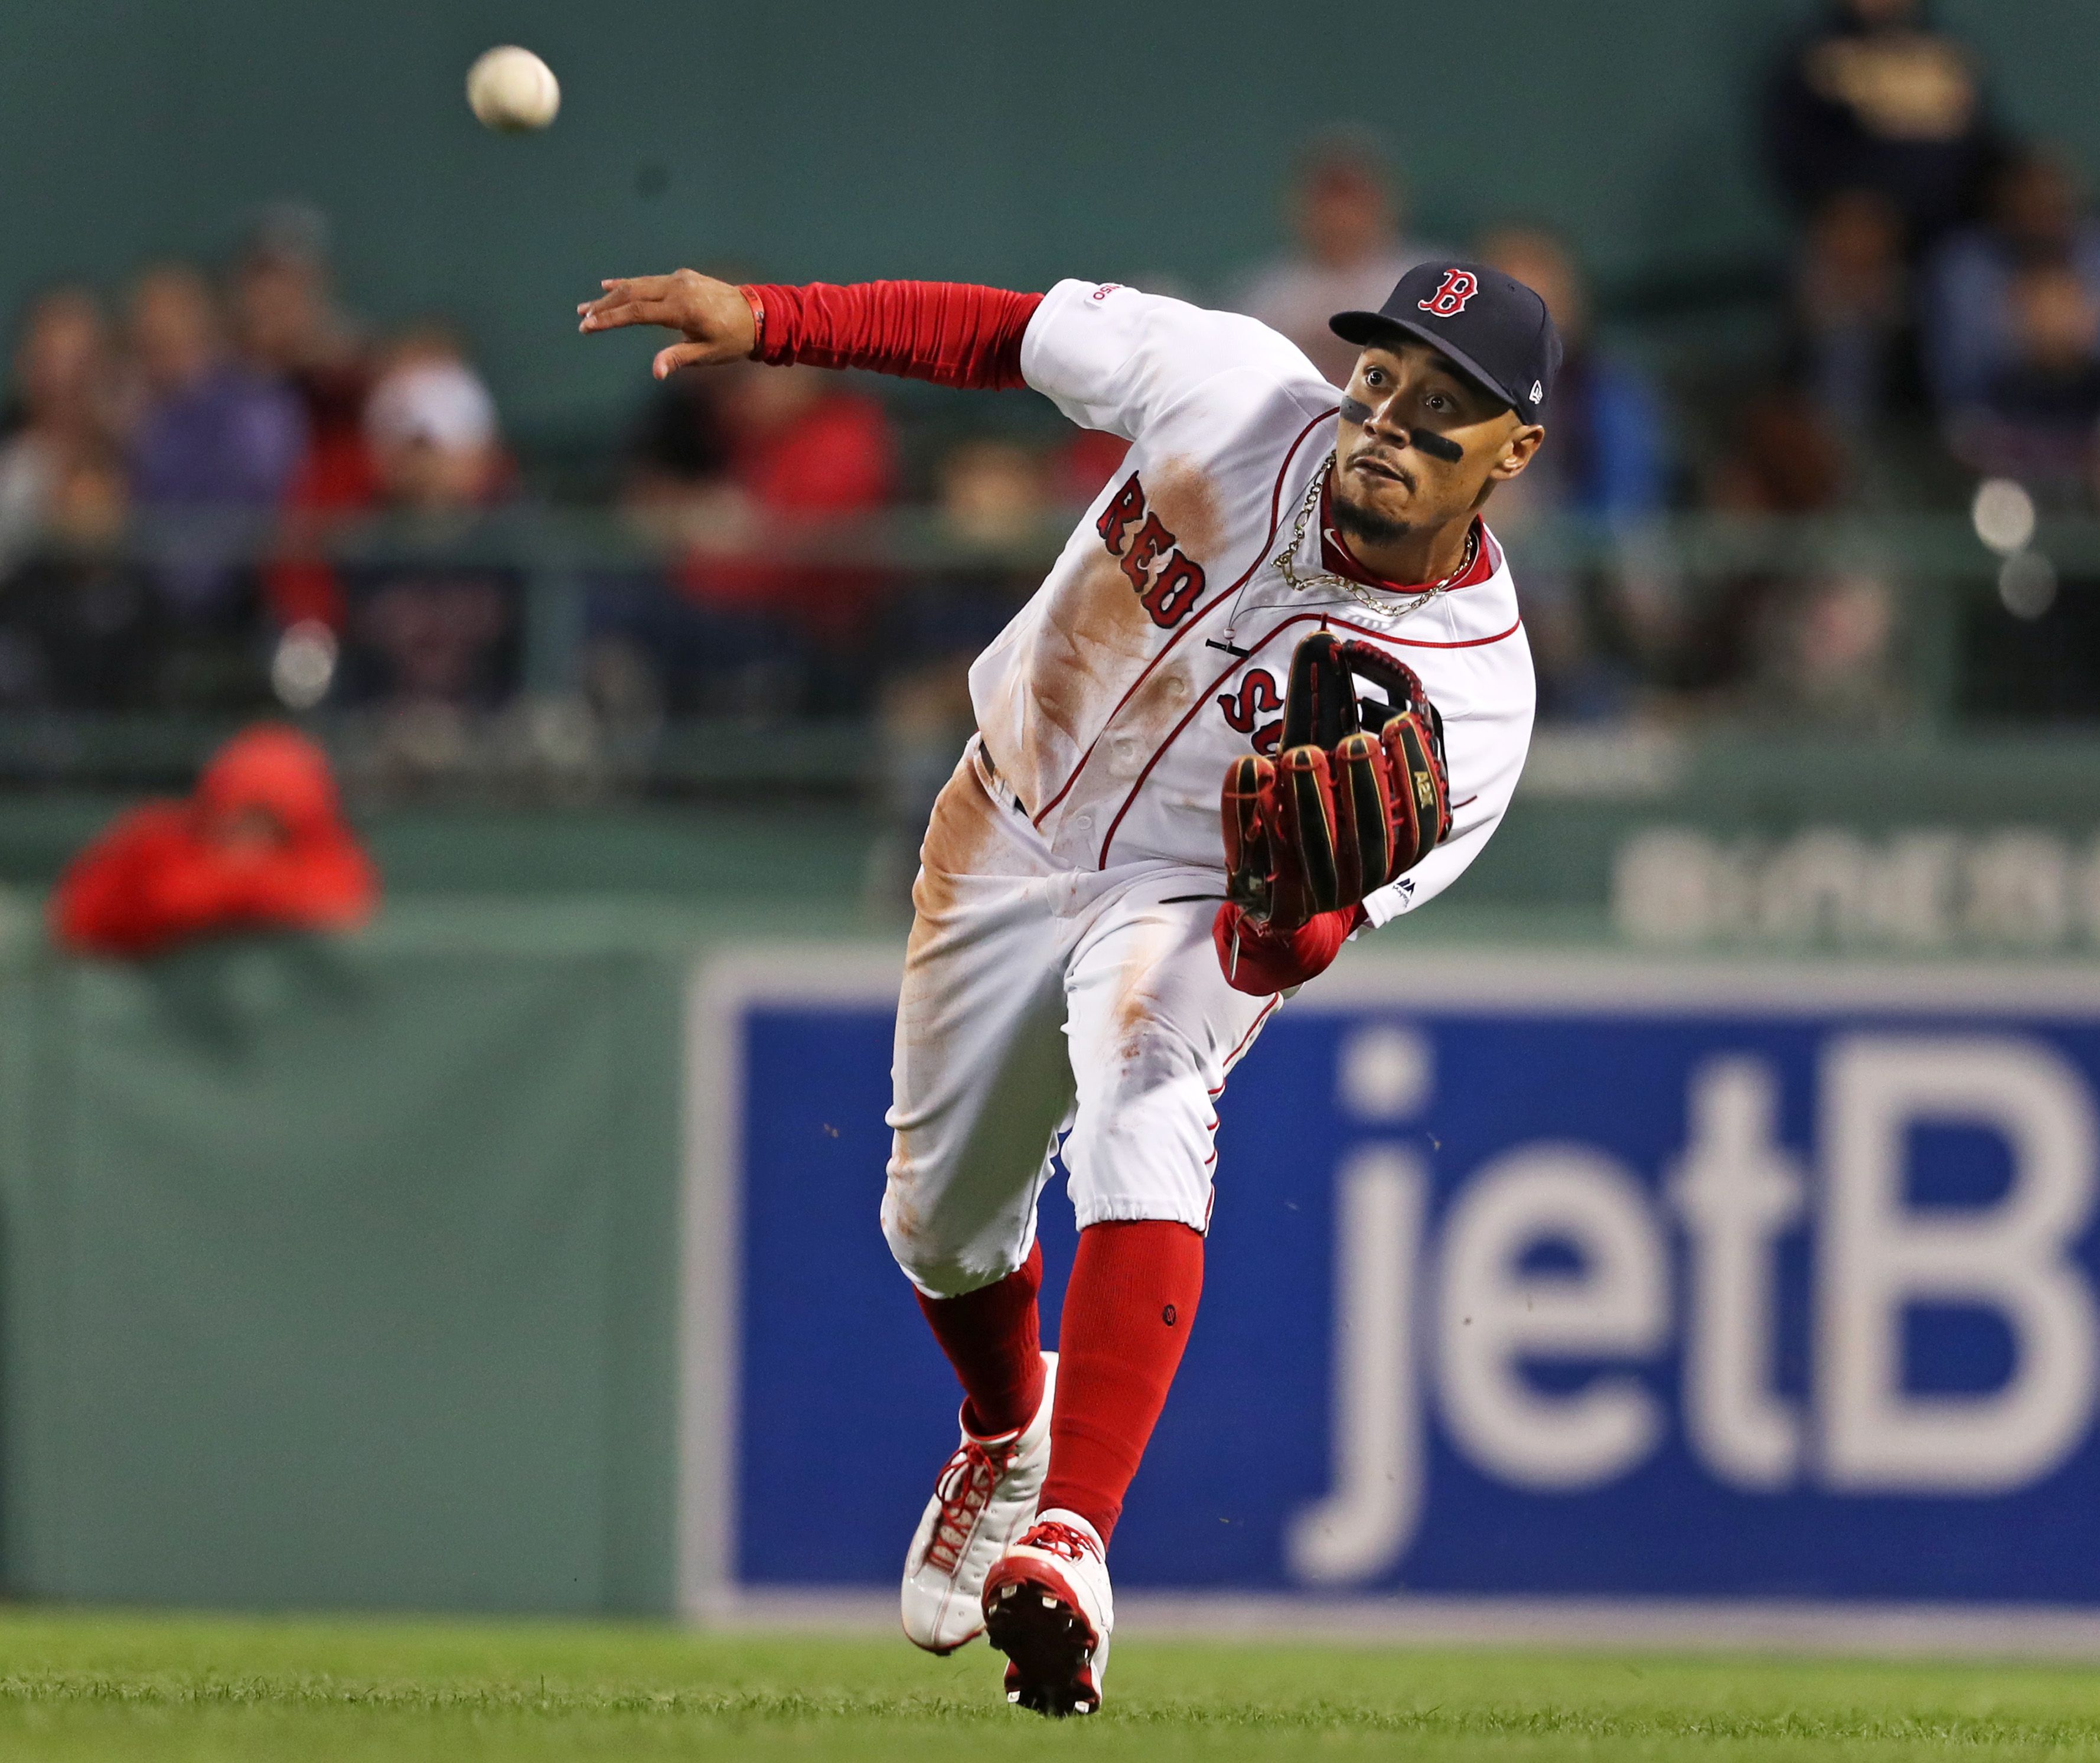 Boston Red Sox 2018: Andrew Benintendi's breakout season